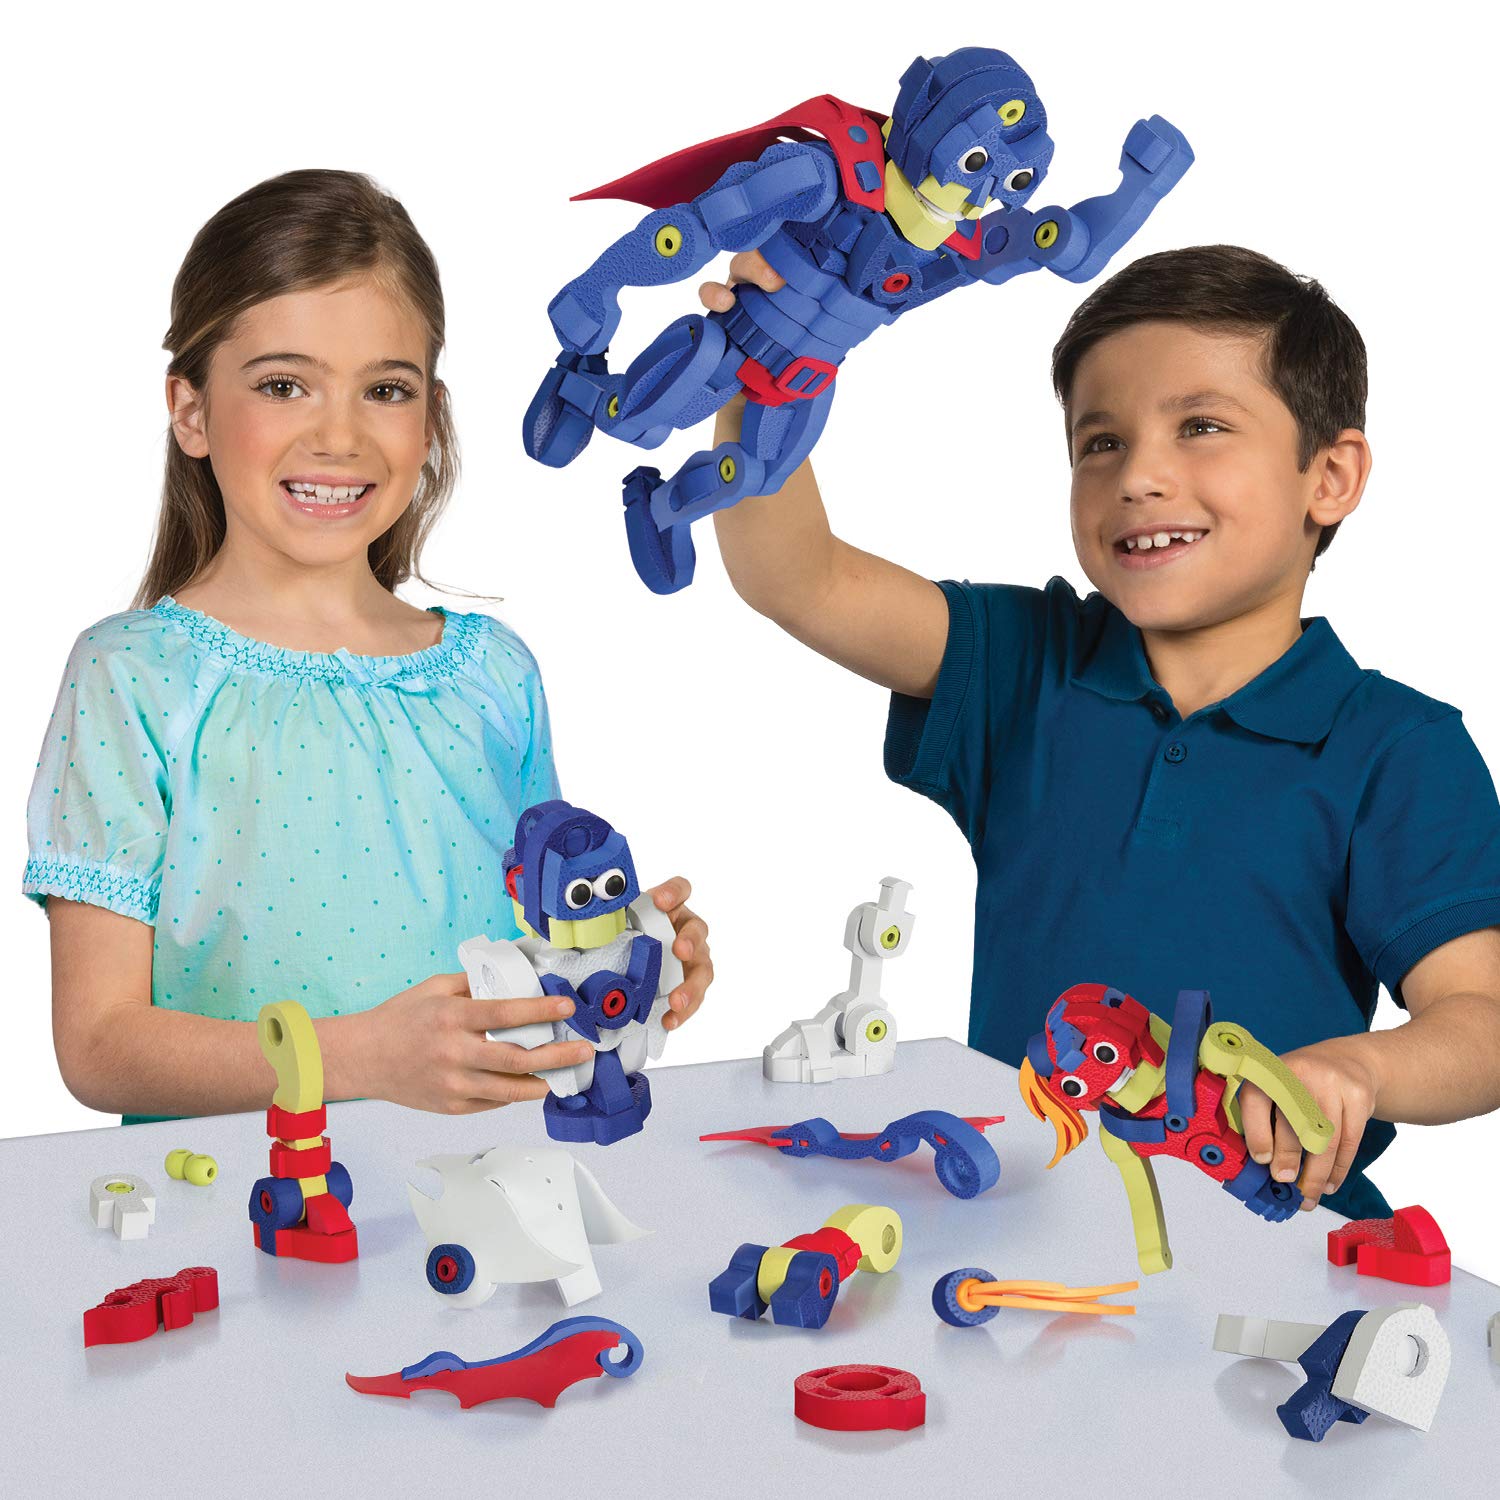 Bloco Toys Build Your Own Superhero | STEM Toy | Comics, Action Figures | DIY Building Construction Set (300 Pieces), Blue/Red/Yellow/